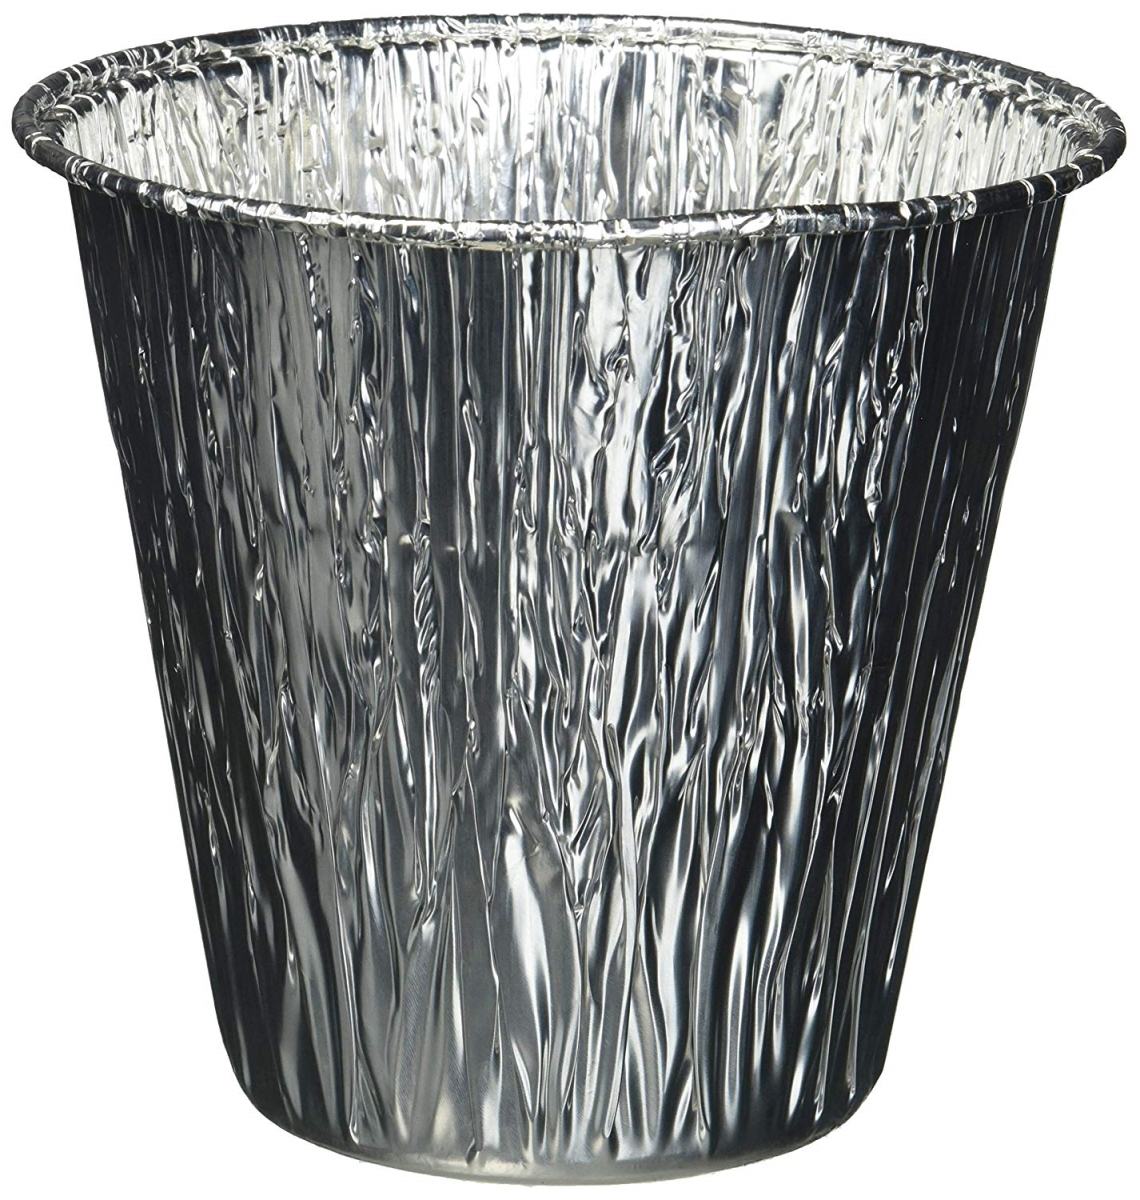 Picture of Dansons 262957 Aluminium Bucket Liner - Pack of 6